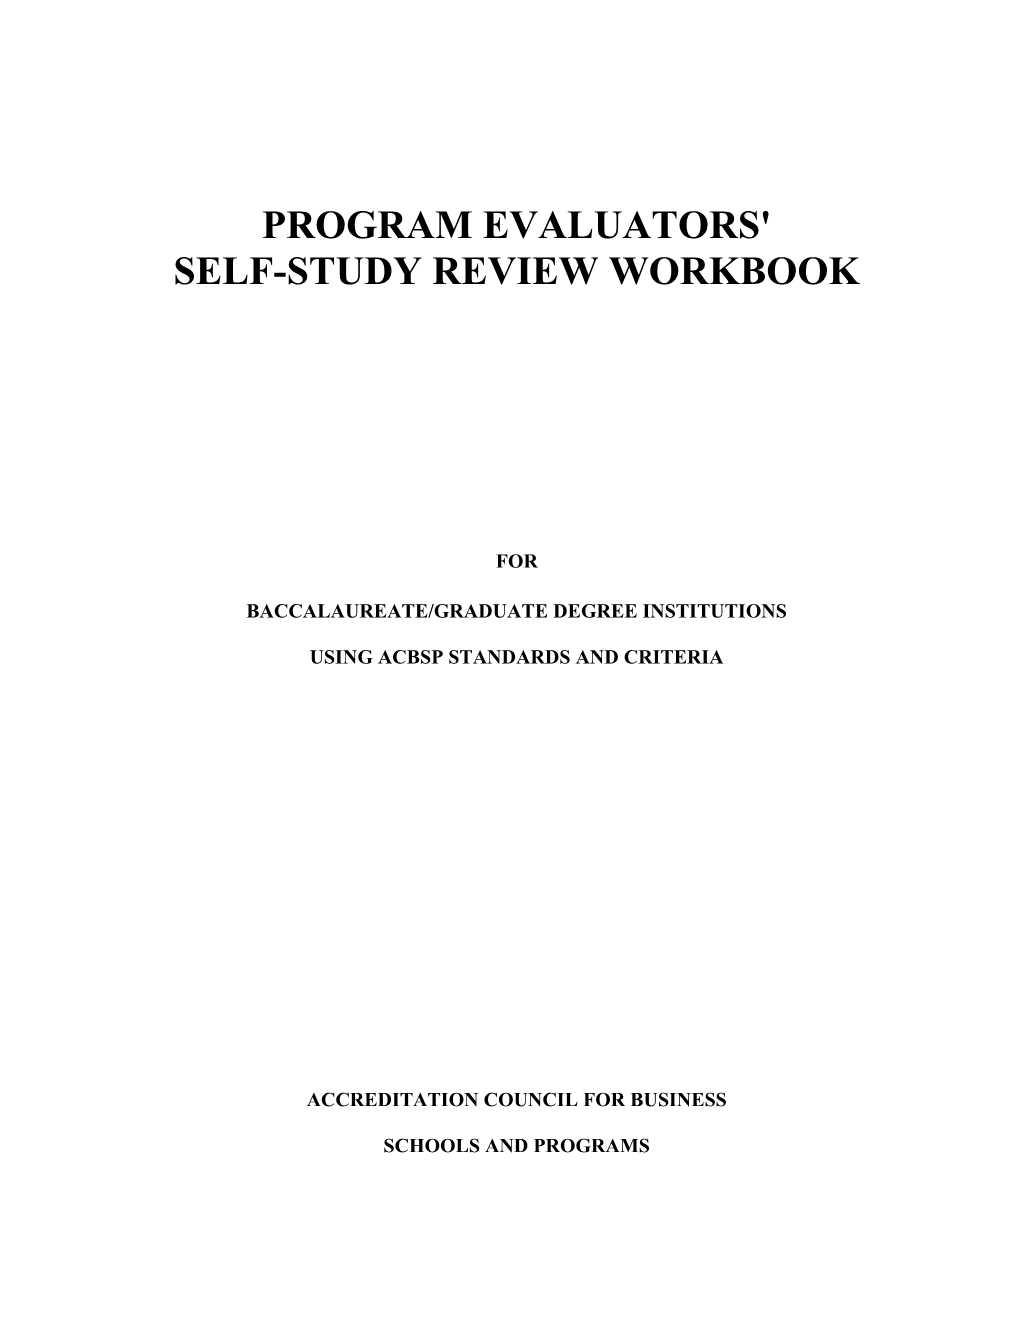 Self-Study Review Workbook